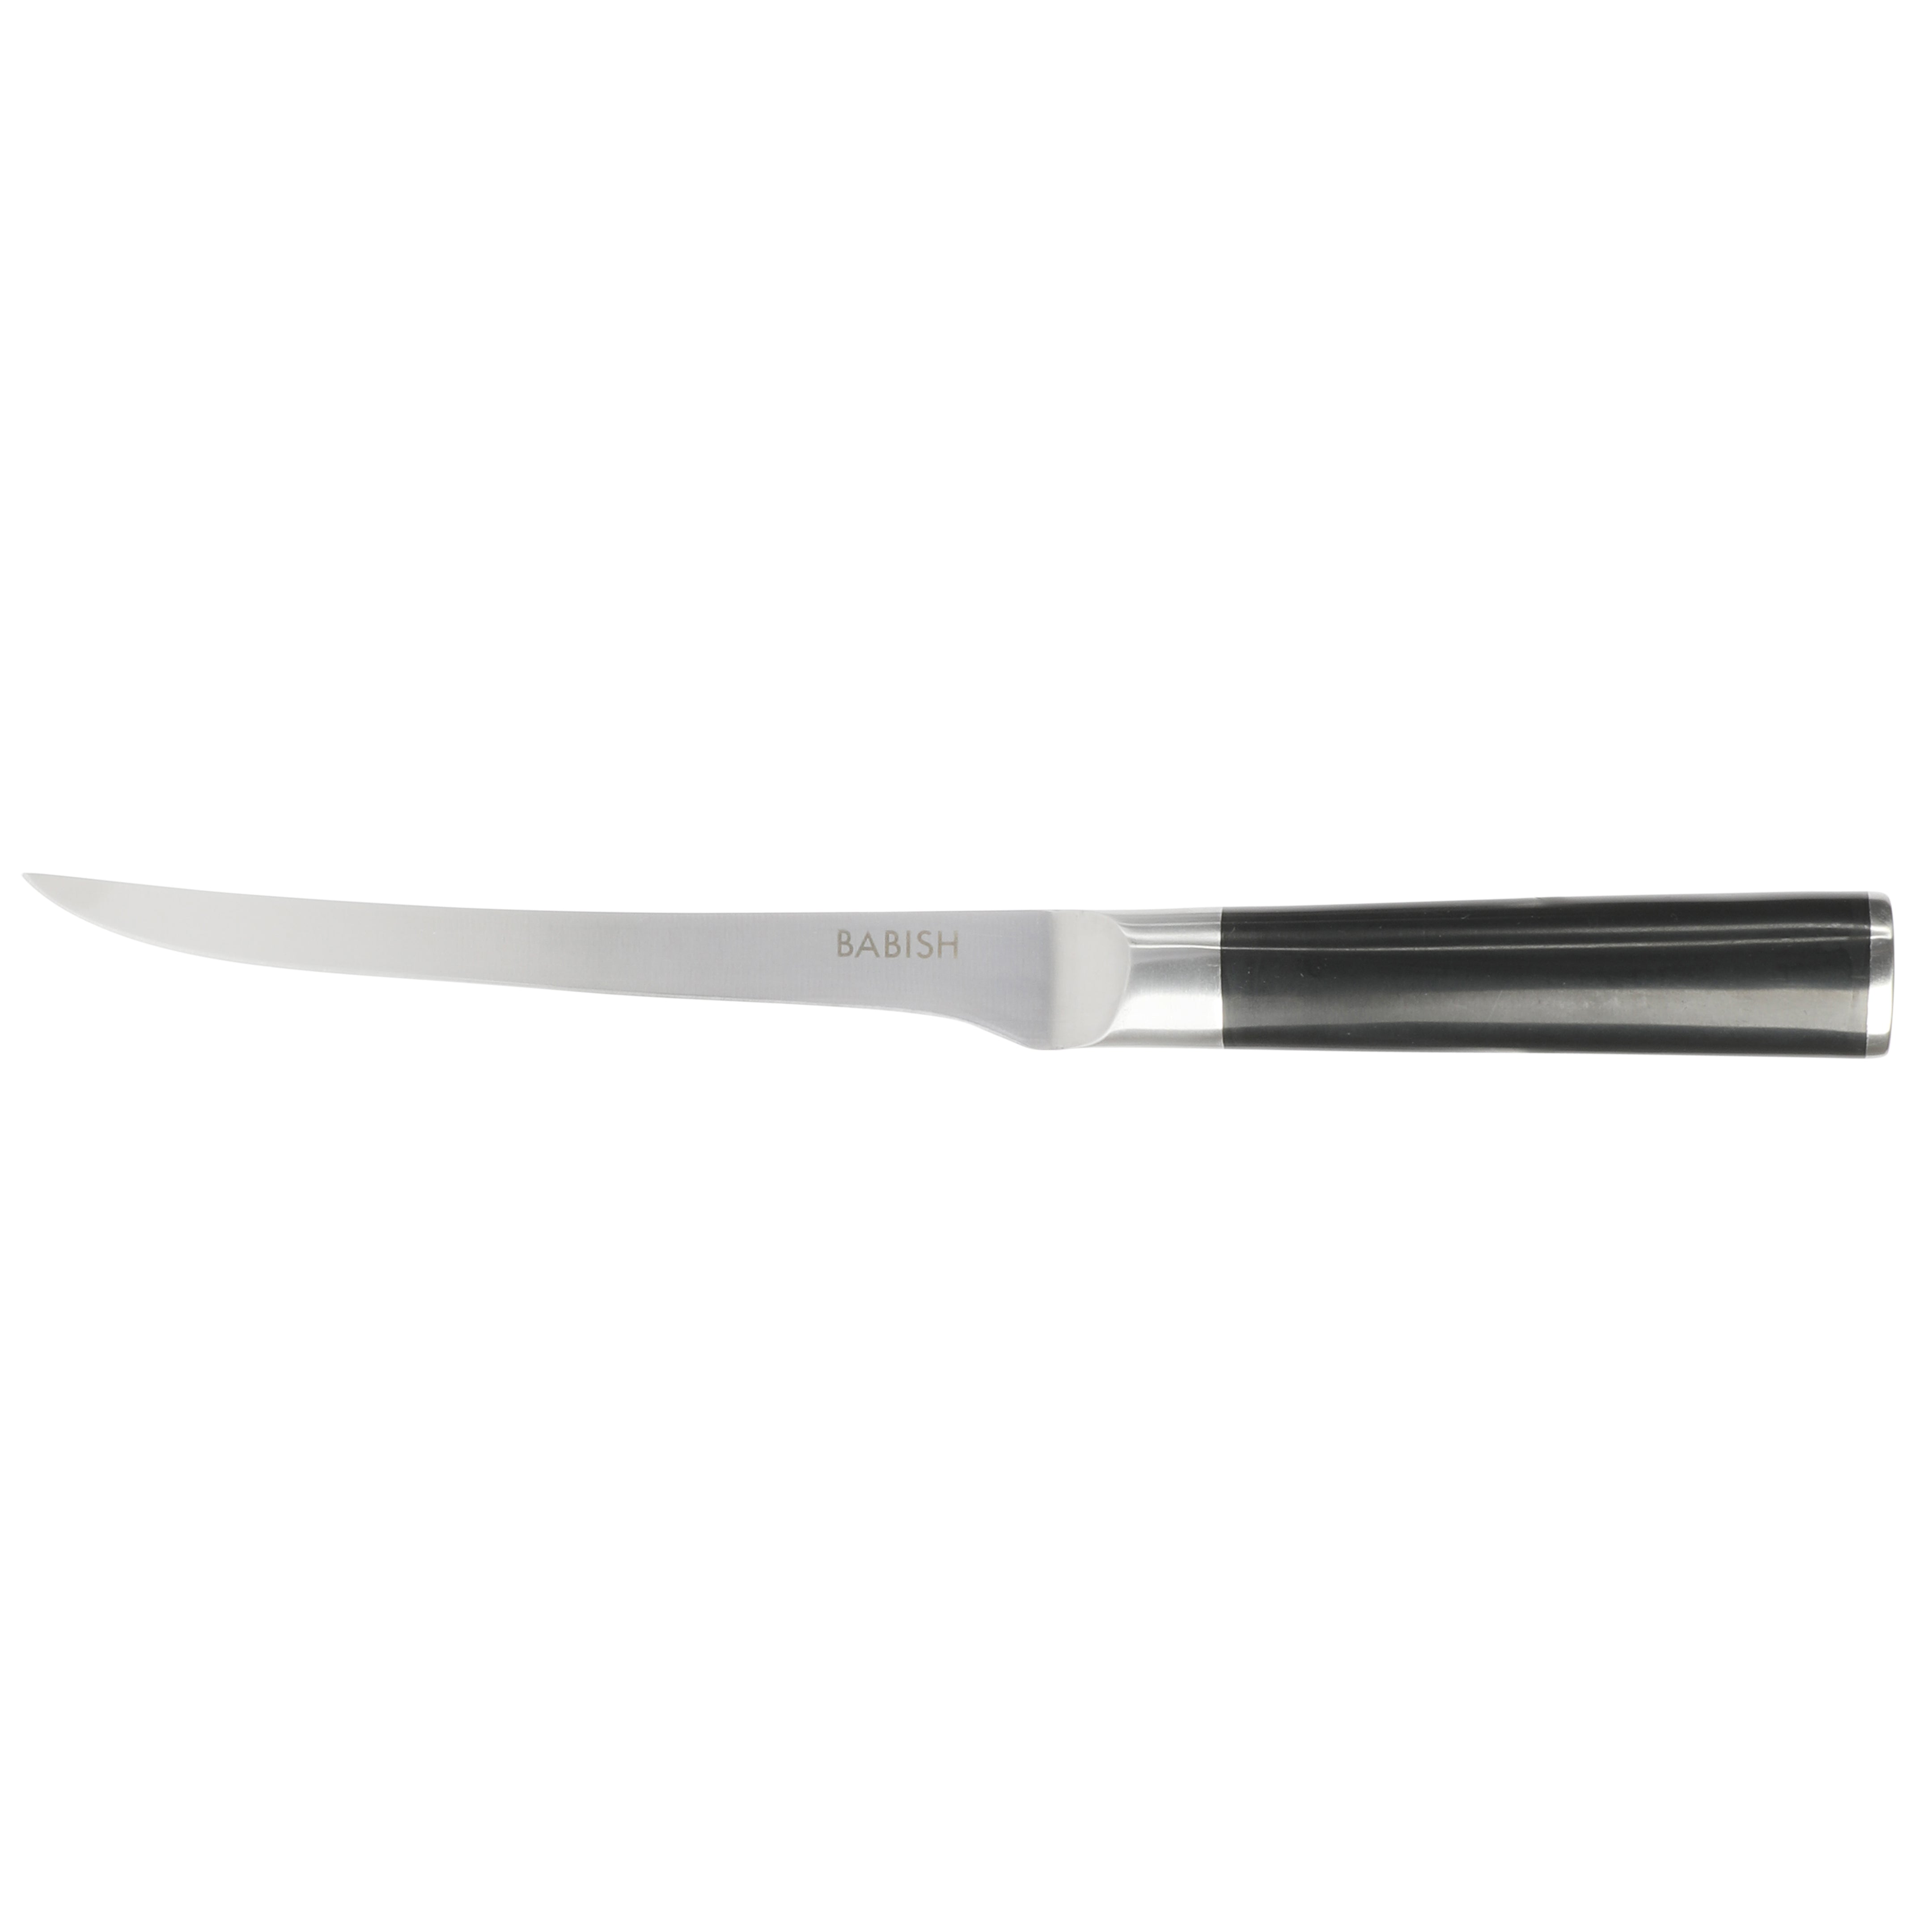  Babish High-Carbon 1.4116 German Steel Cutlery, 8 Chef Knife,  & High-Carbon 1.4116 German Steel Cutlery, 6.5 Santoku Knife: Home &  Kitchen